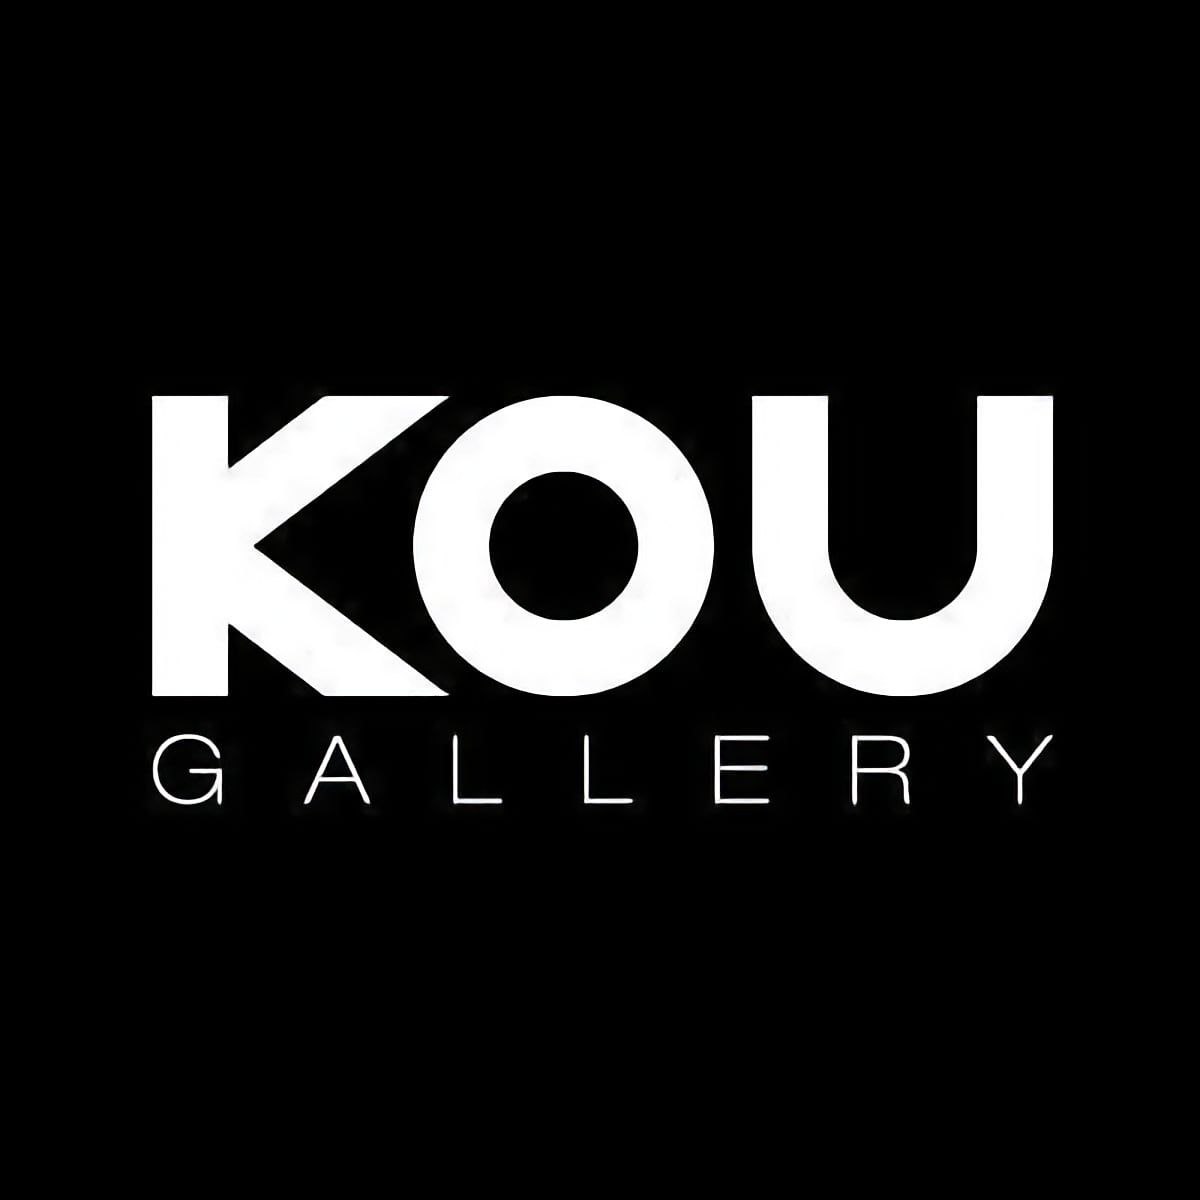 Kou Gallery